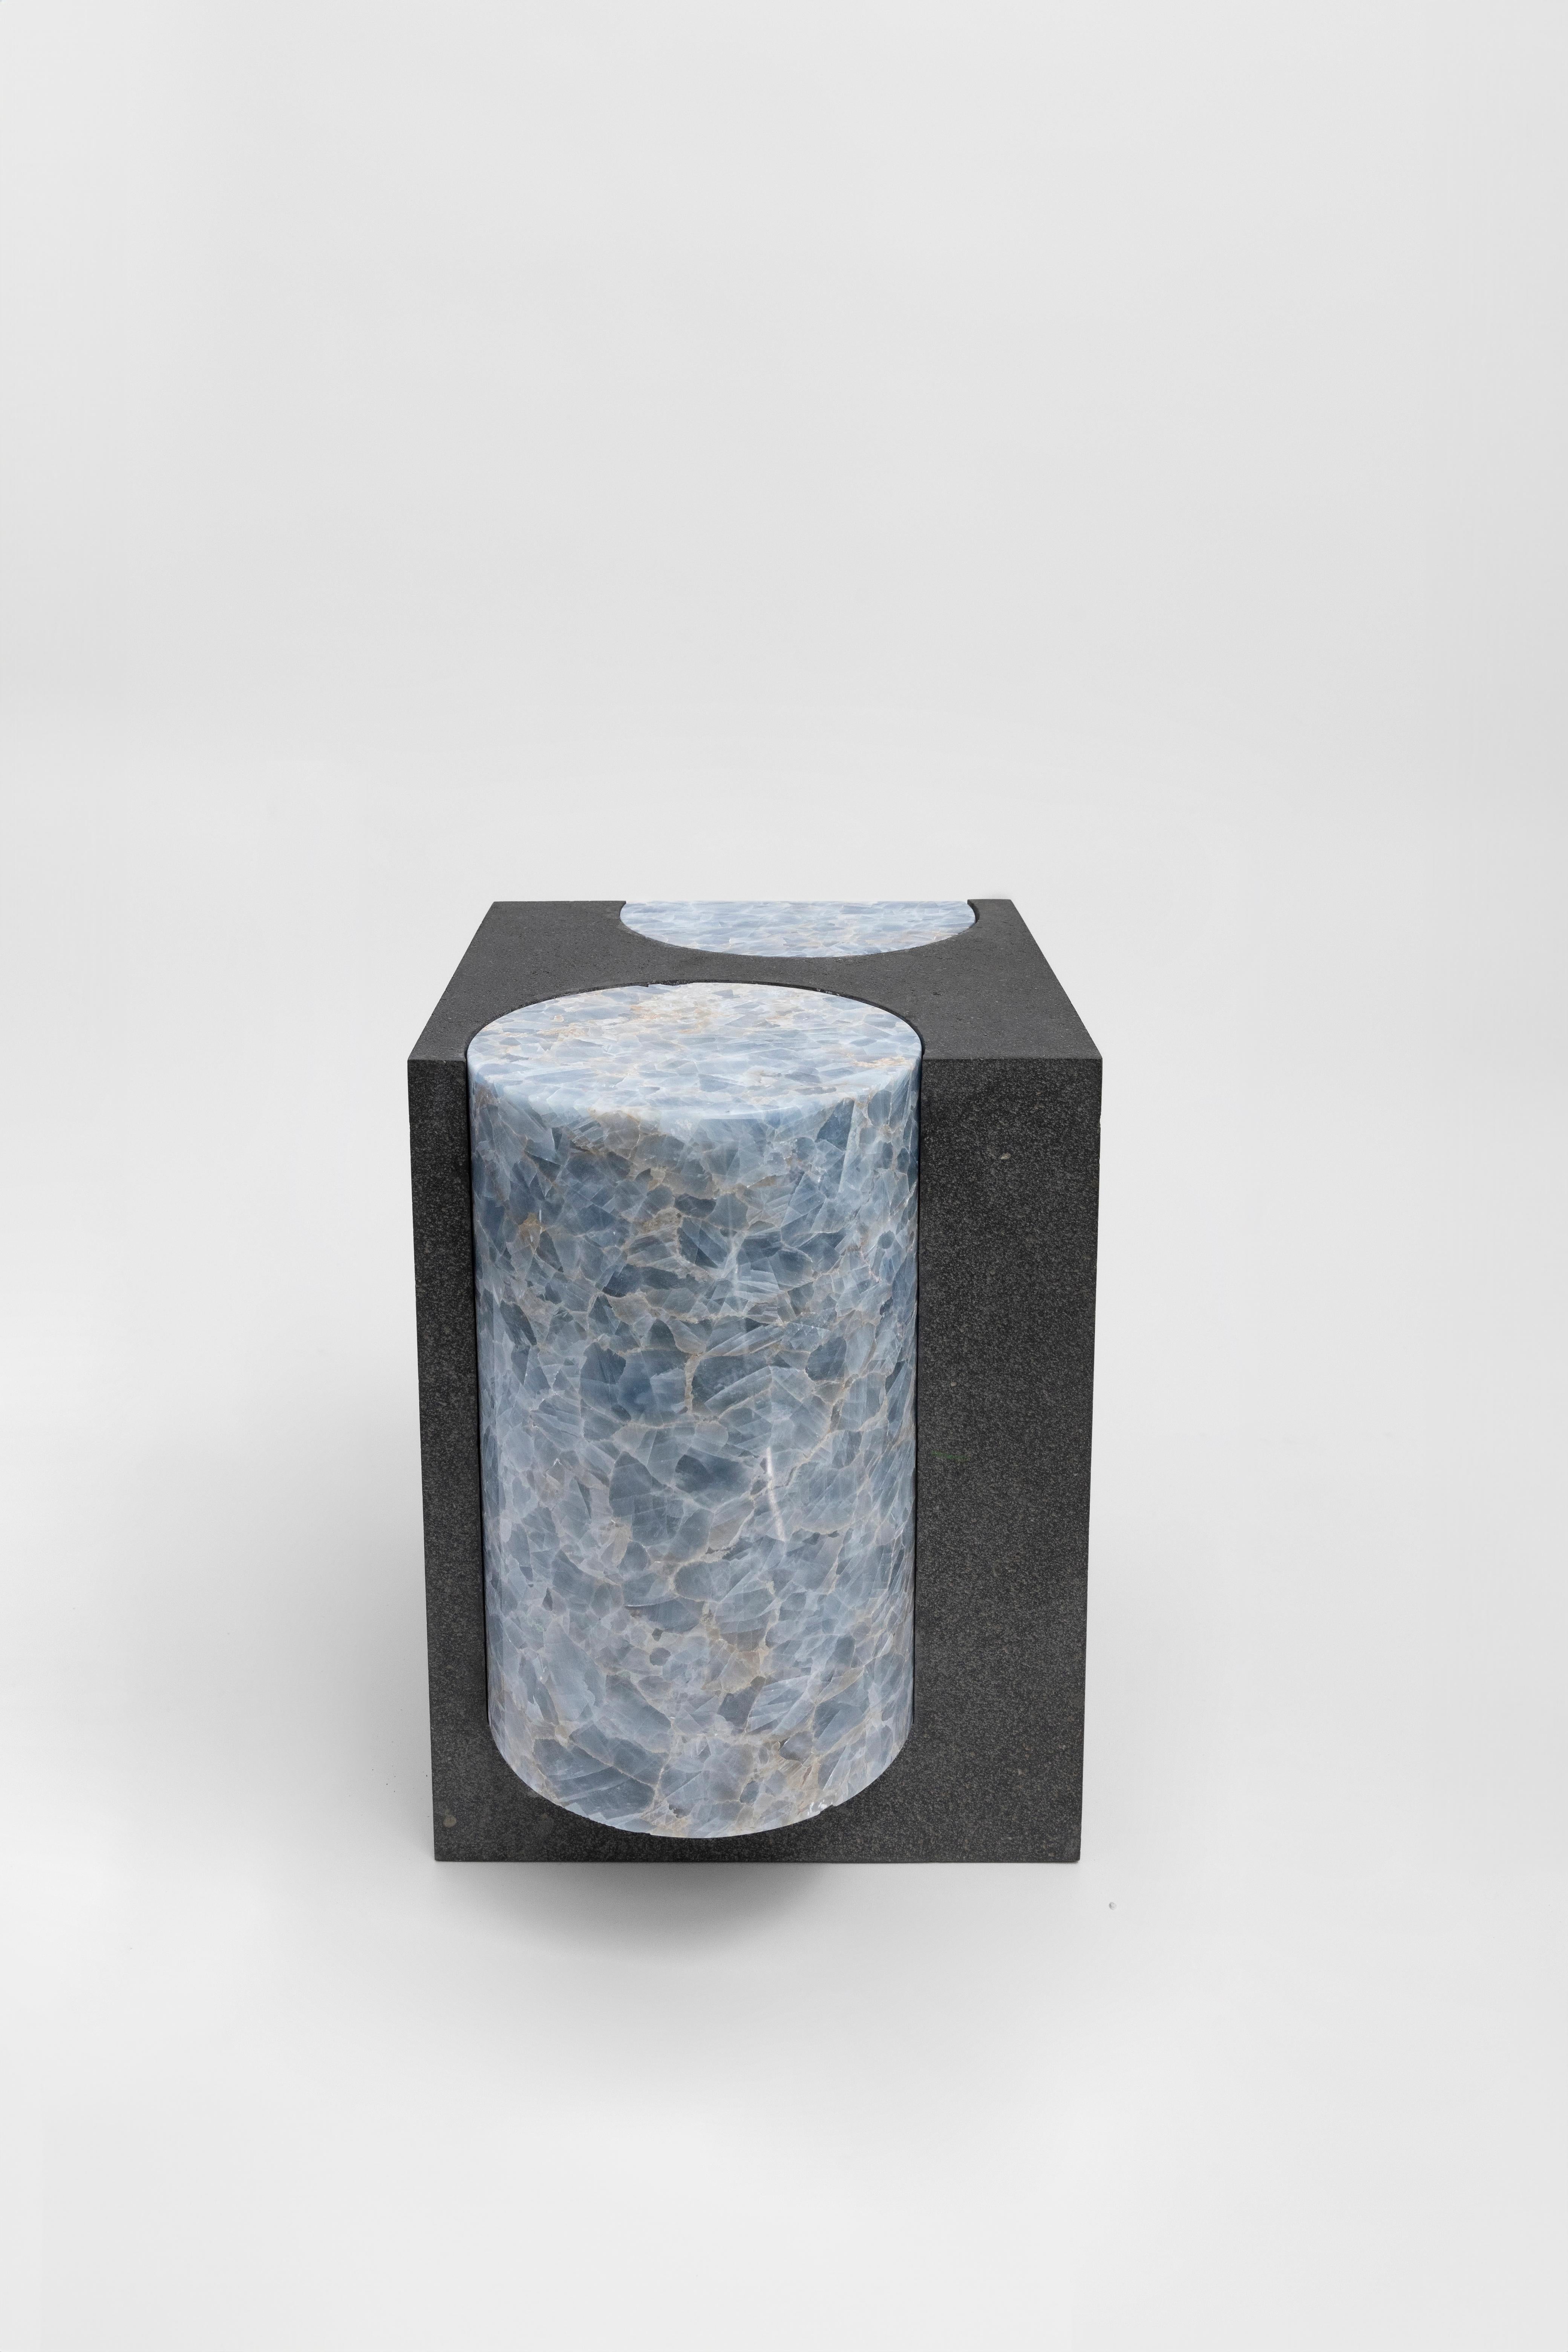 Stone Volcanic Shades I - Sten Studio - Lava stone and blue calcite For Sale